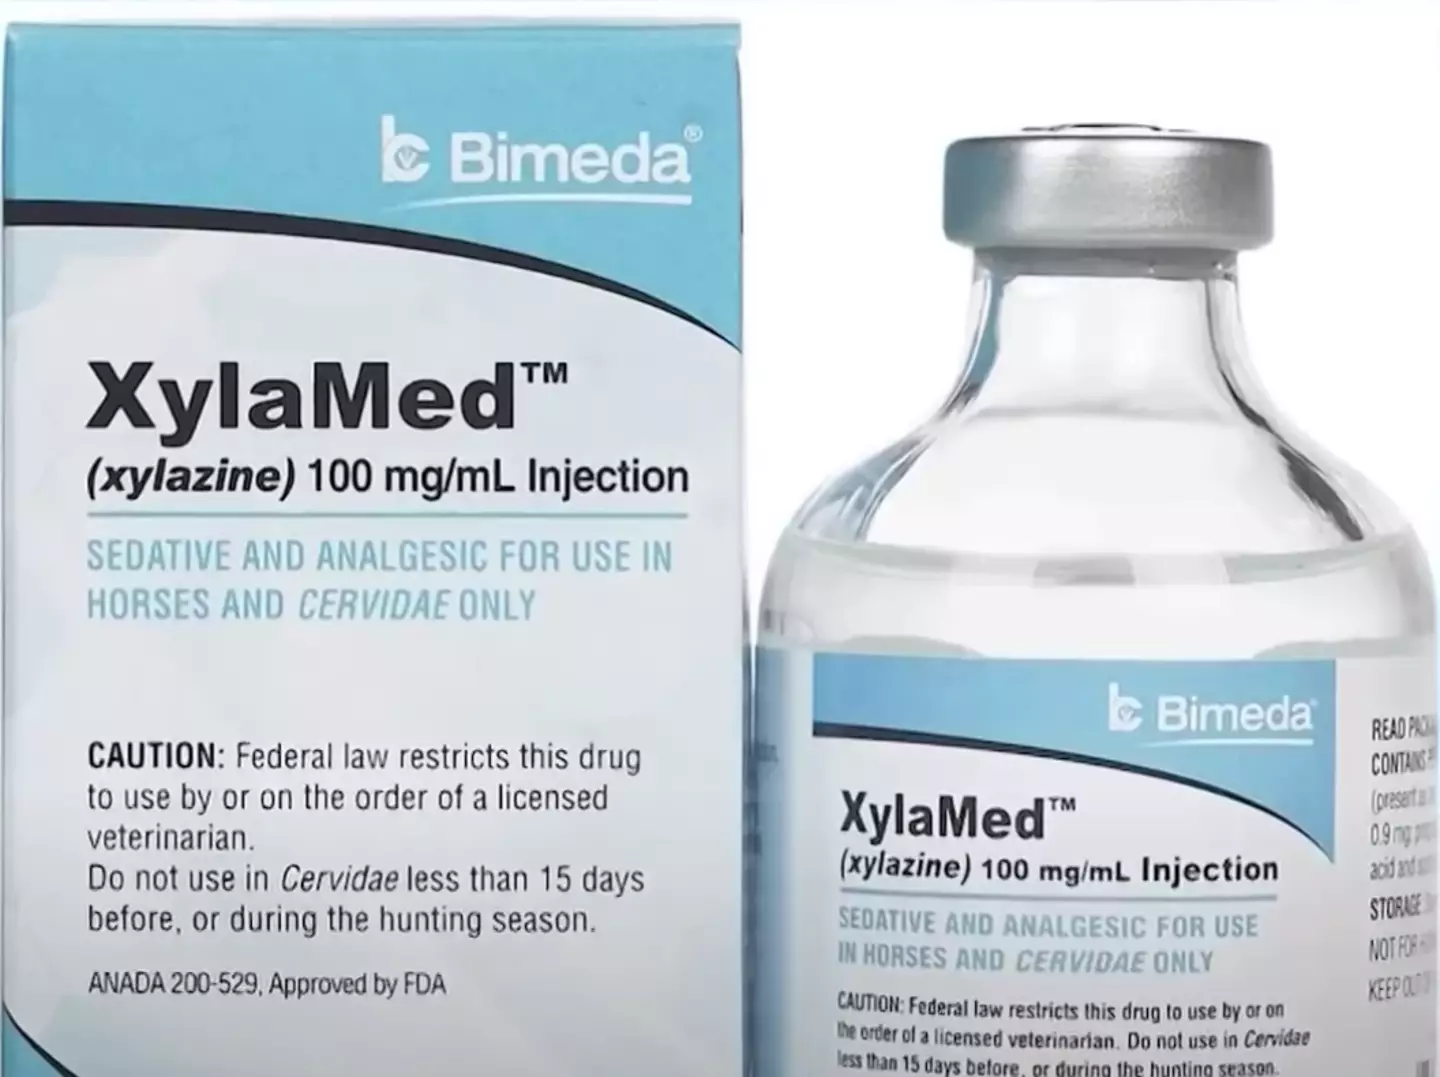 Xylazine is used as an animal sedative.